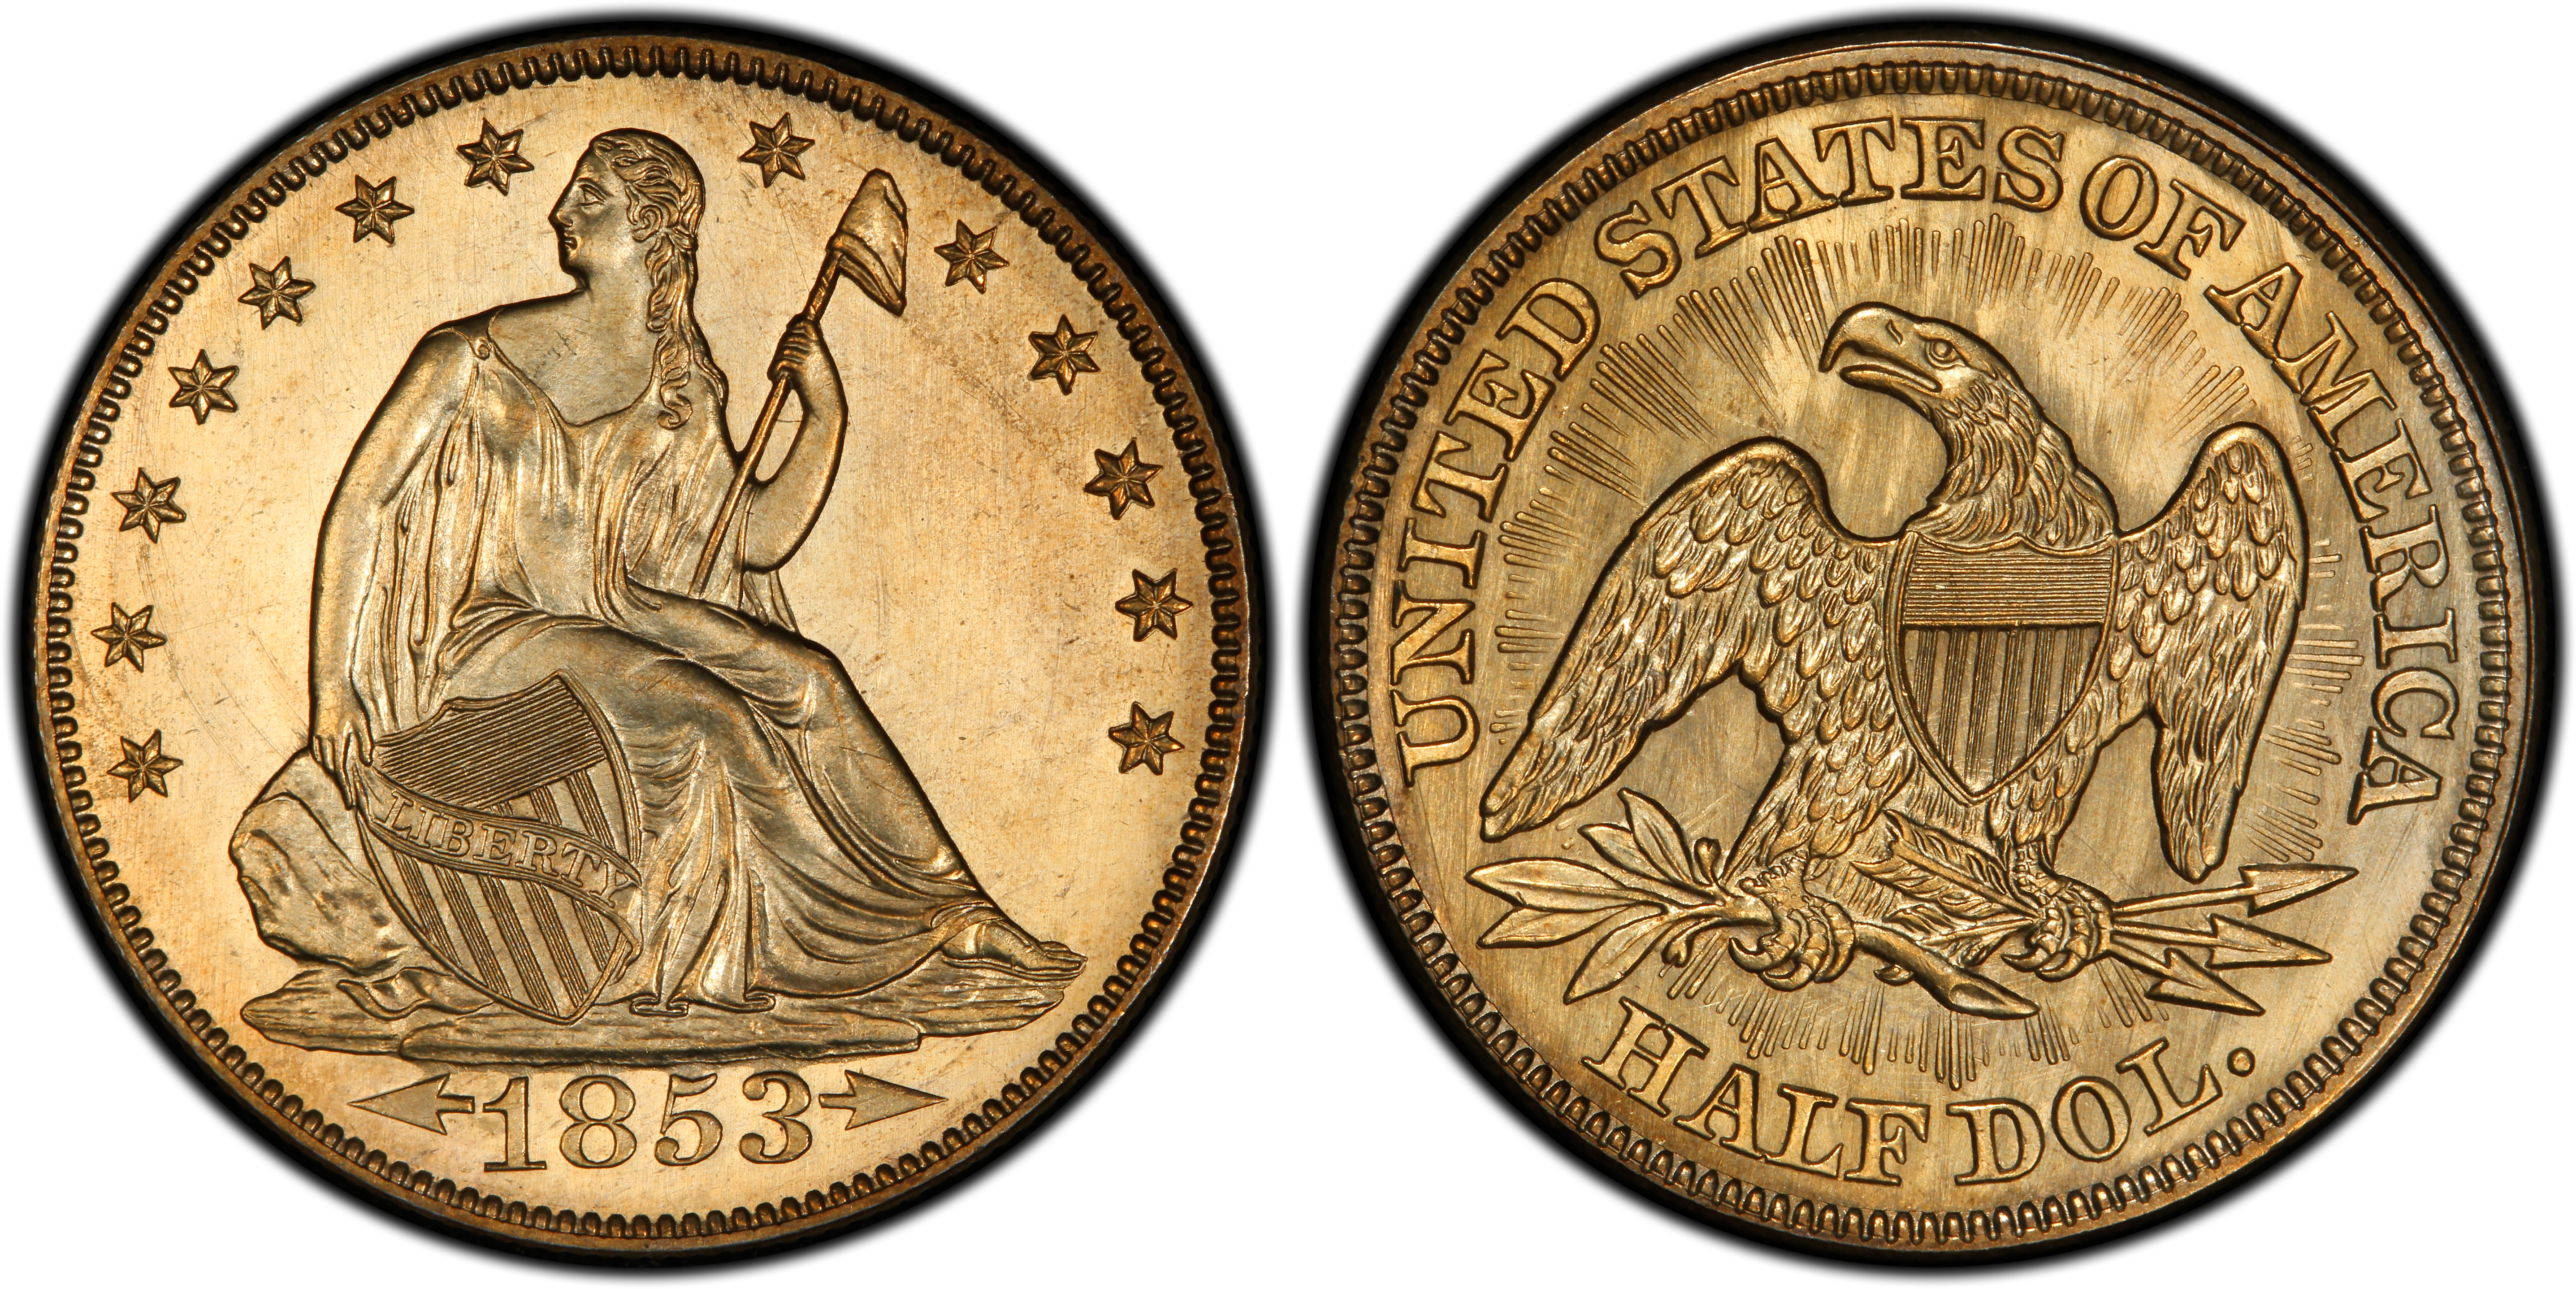 Paragon Numismatics - Half Dollar Coin - 1853 Arrows and Rays Liberty Seated Half Dollar